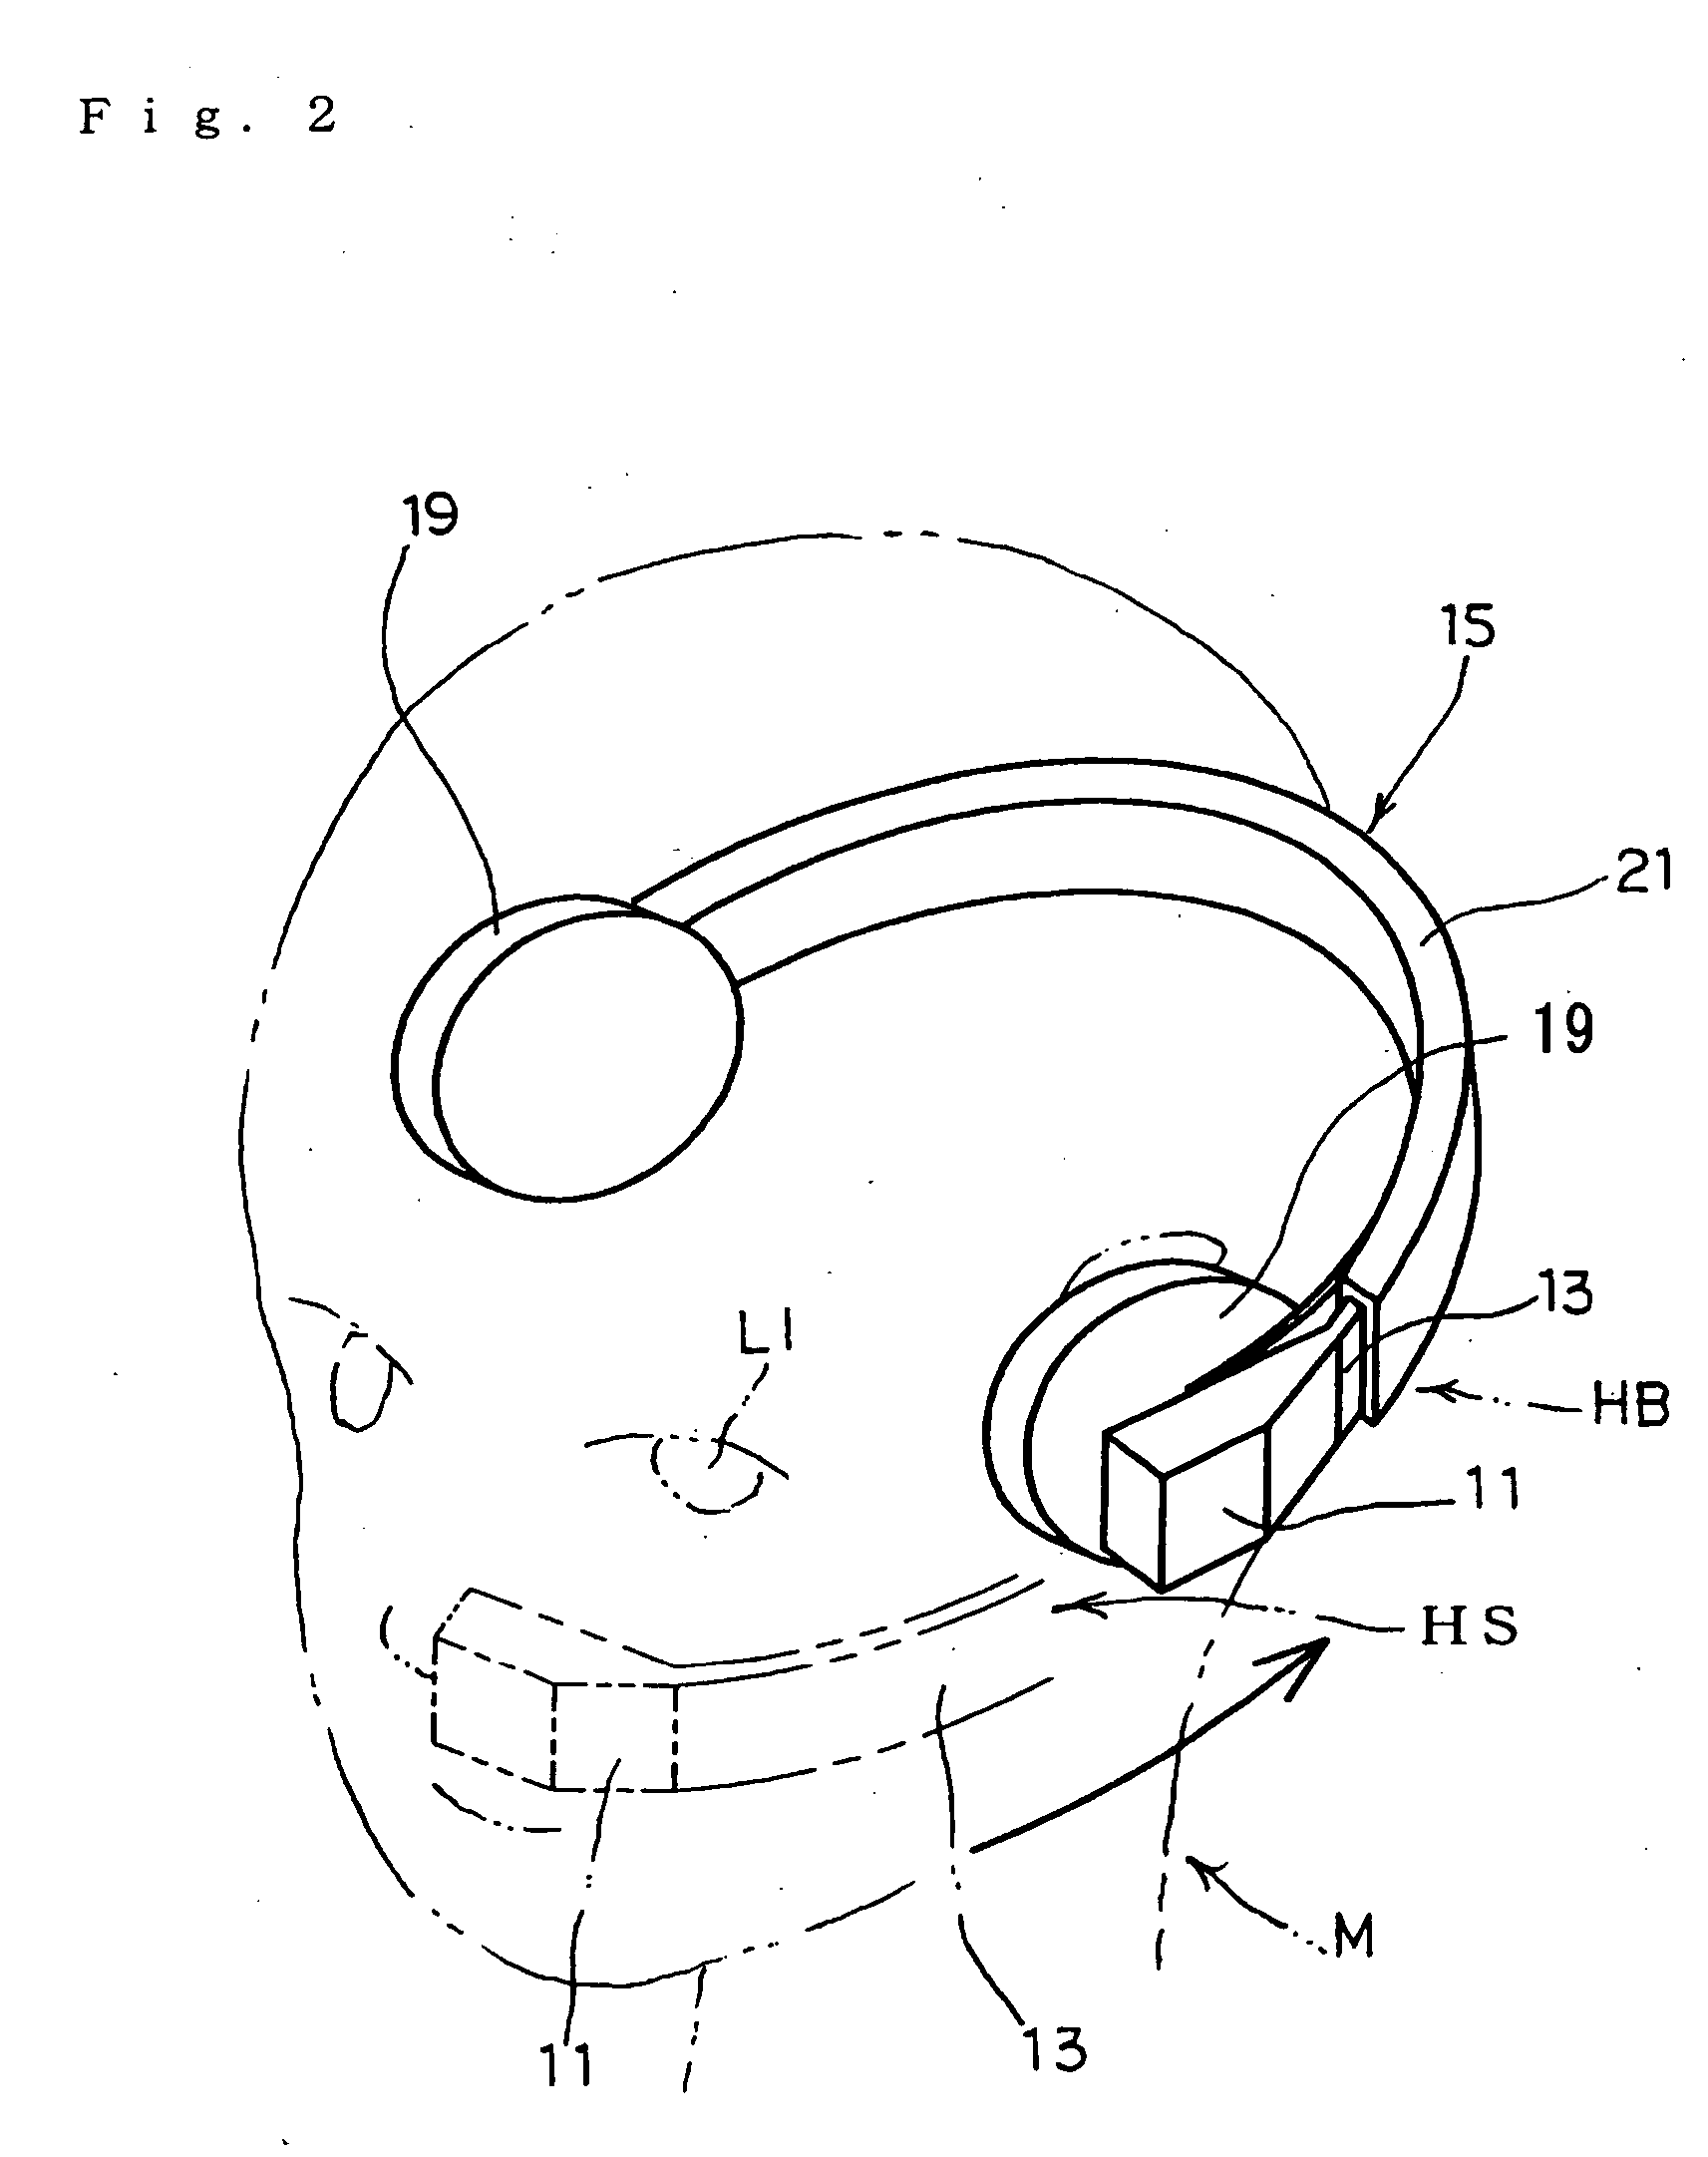 Head mounted display